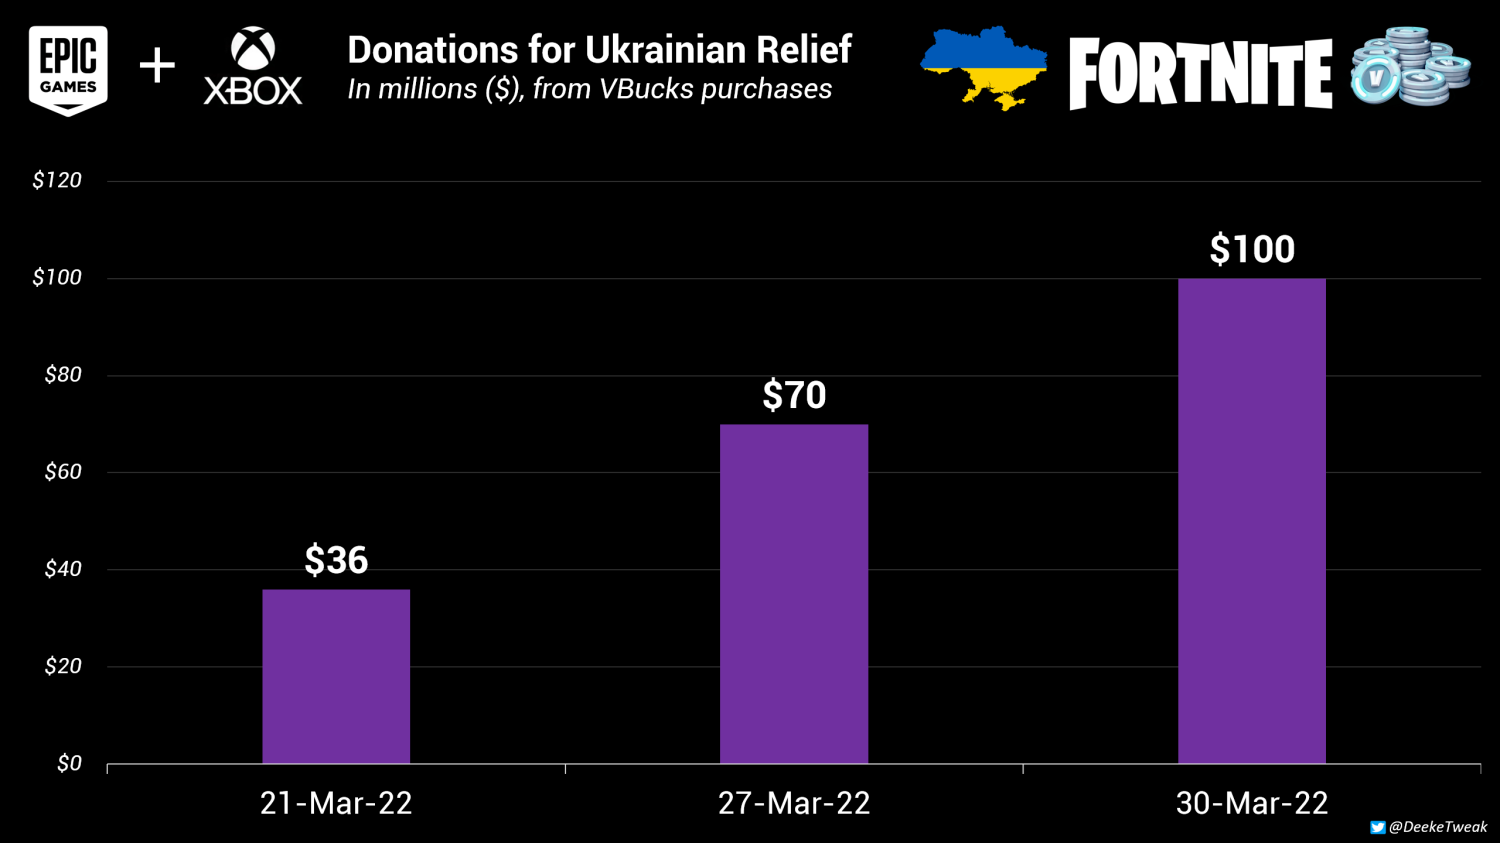 Fortnite players donate $100 million to Ukraine